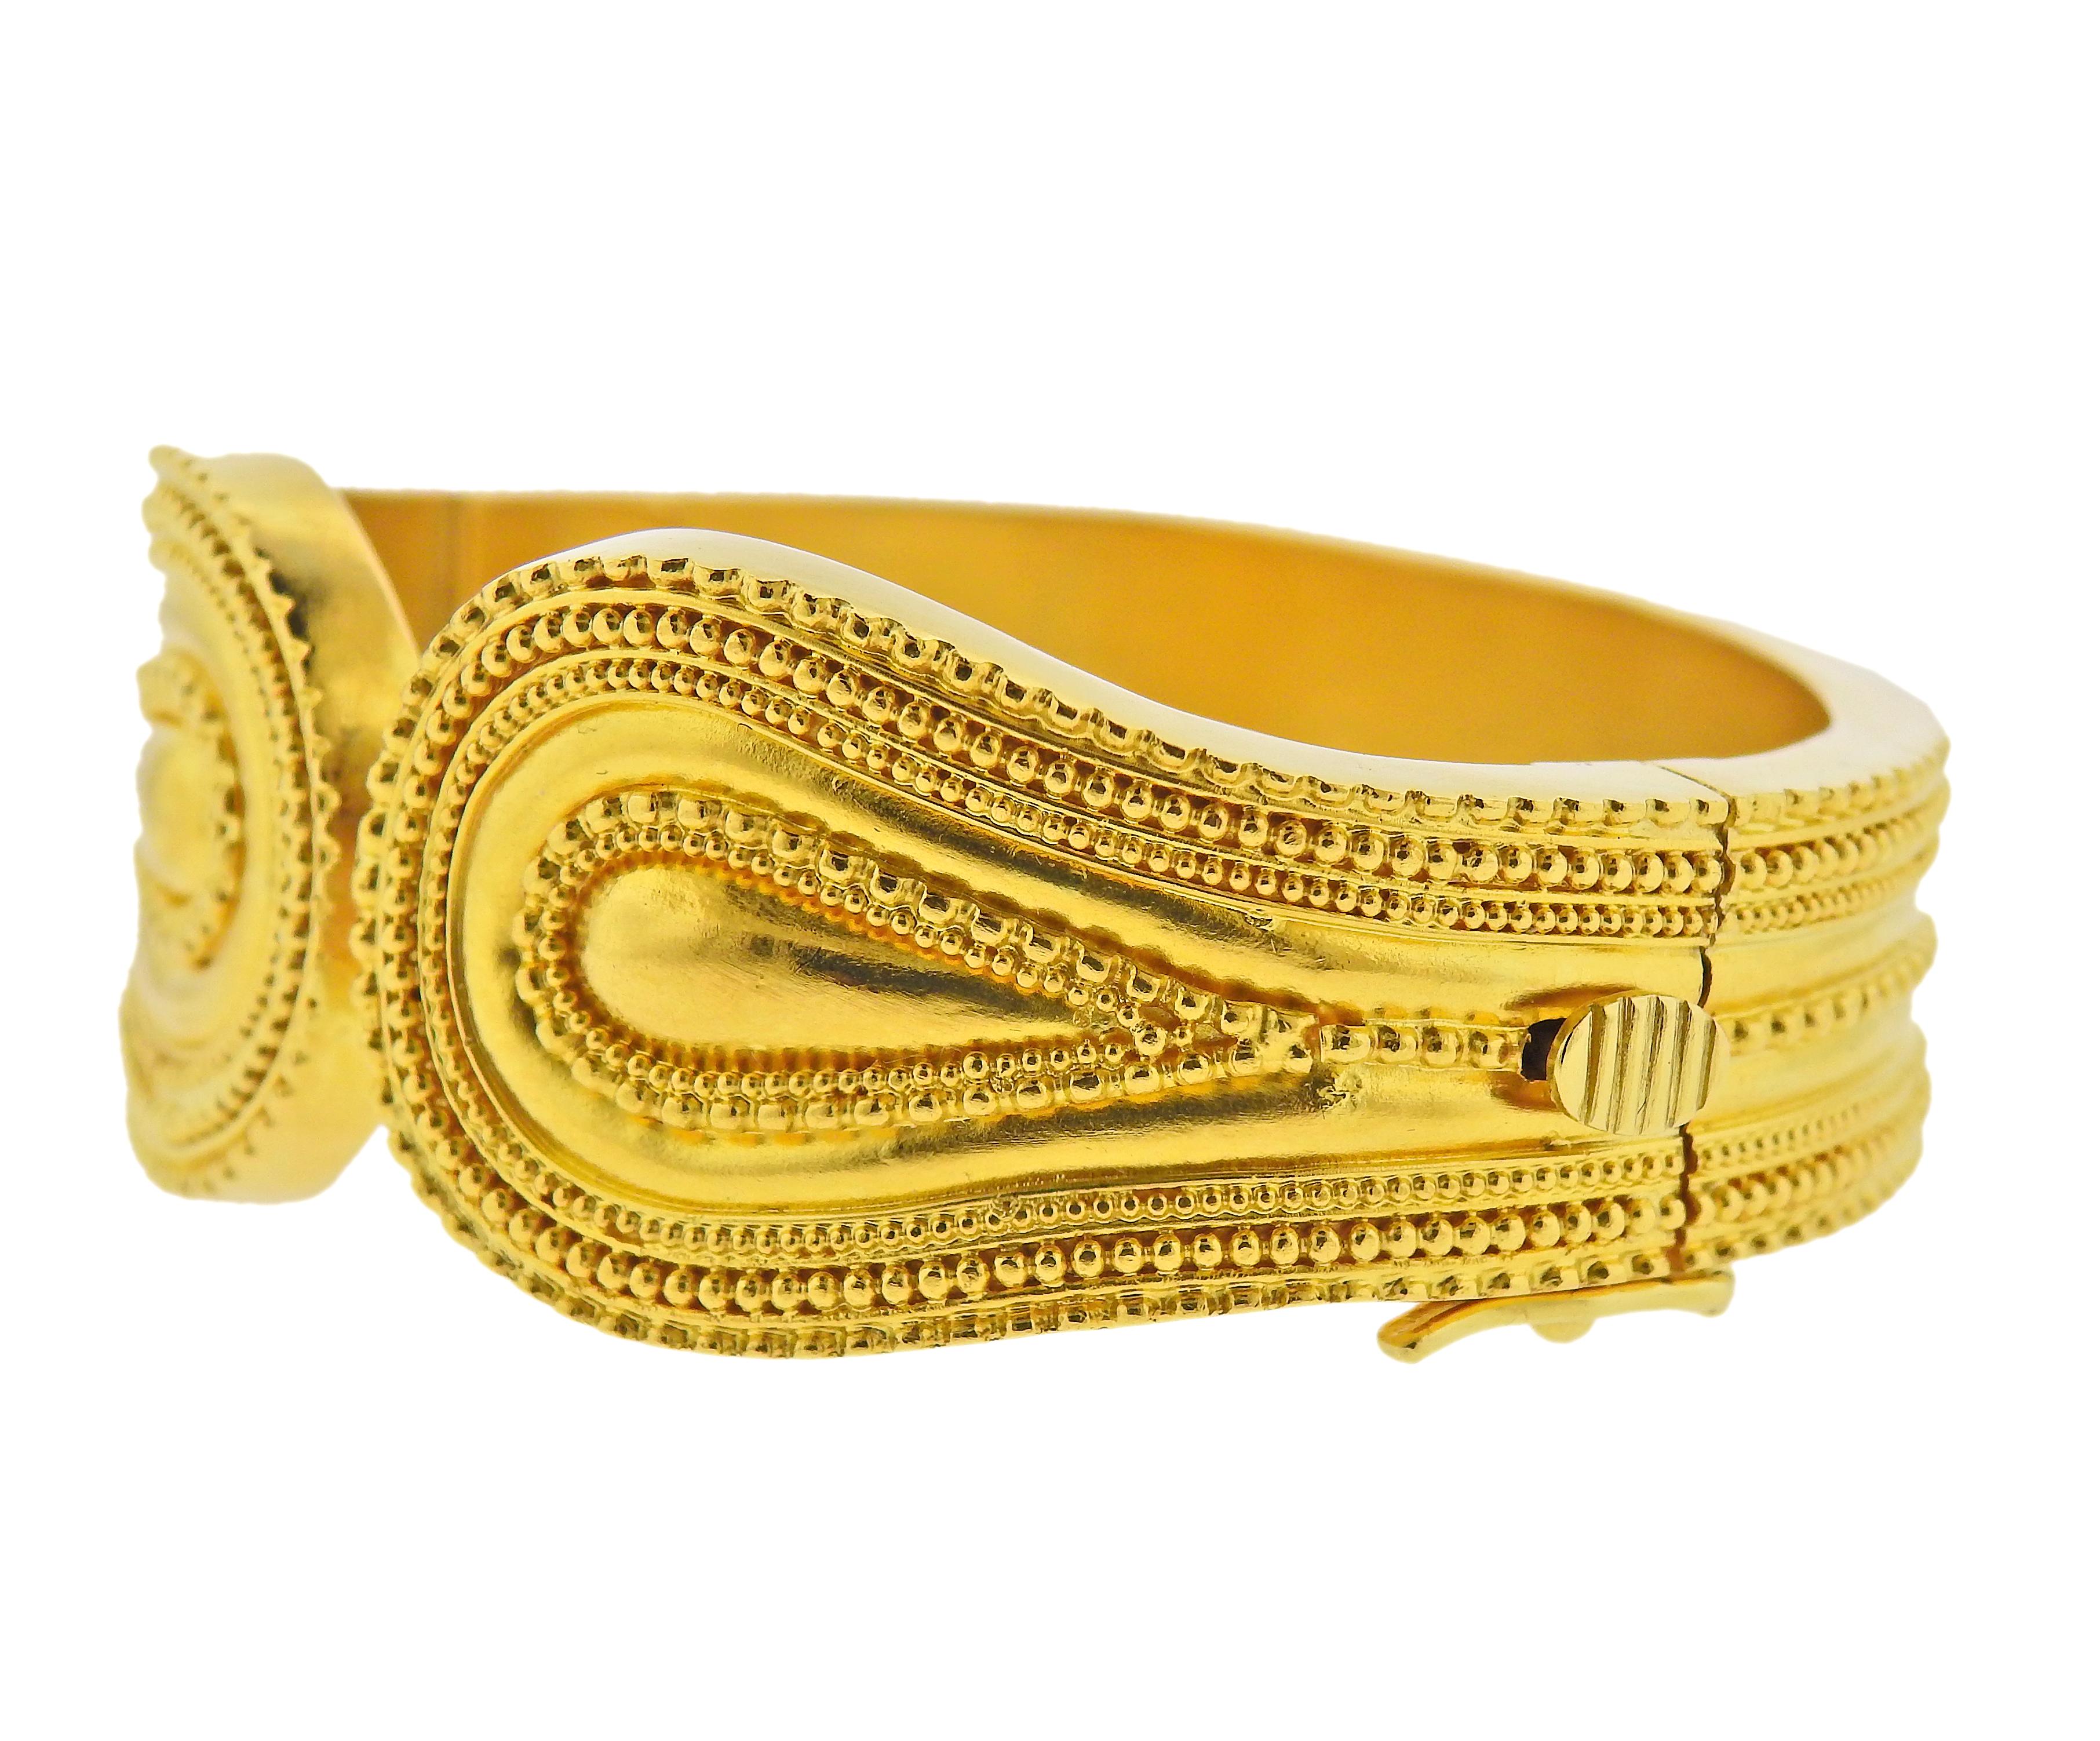 18k yellow gold cuff bracelet by Greek designer Ilias Lalaounis. Bracelet will fit approx. 6.75